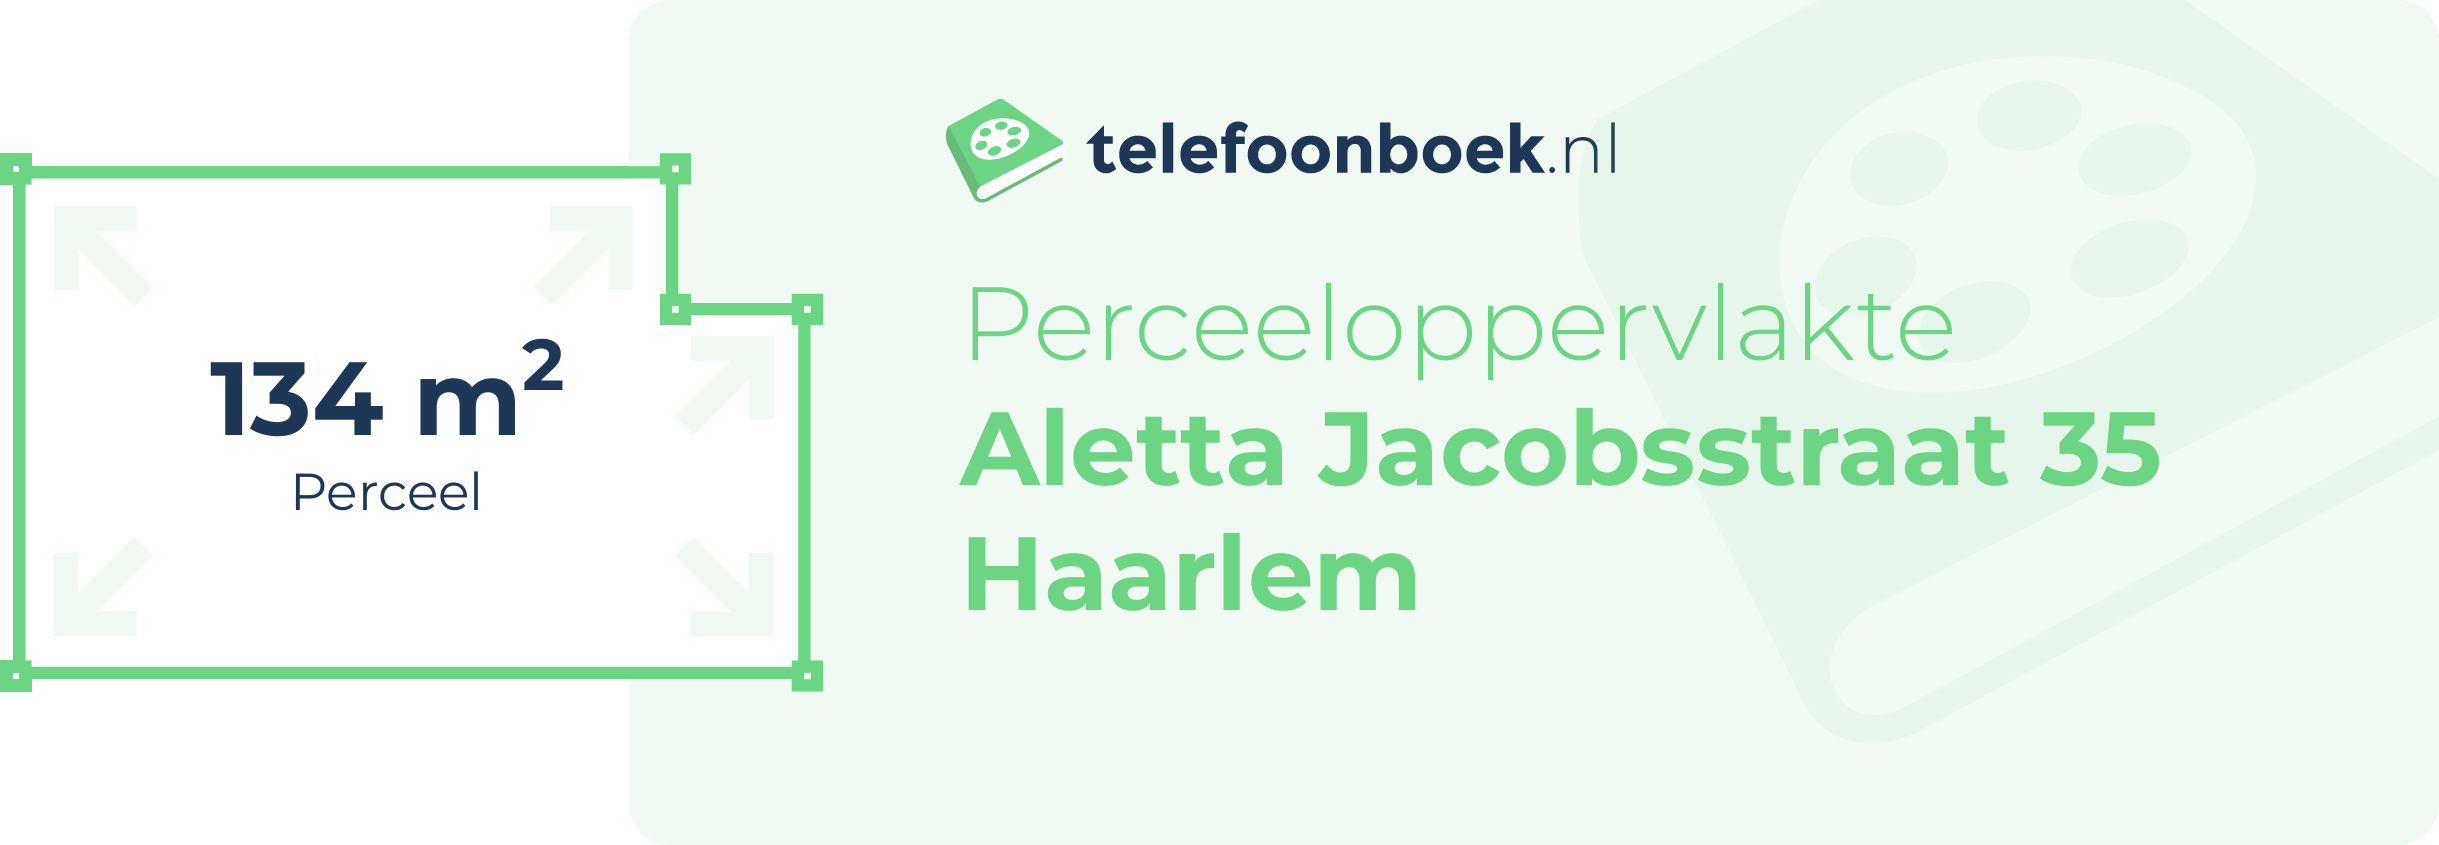 Perceeloppervlakte Aletta Jacobsstraat 35 Haarlem